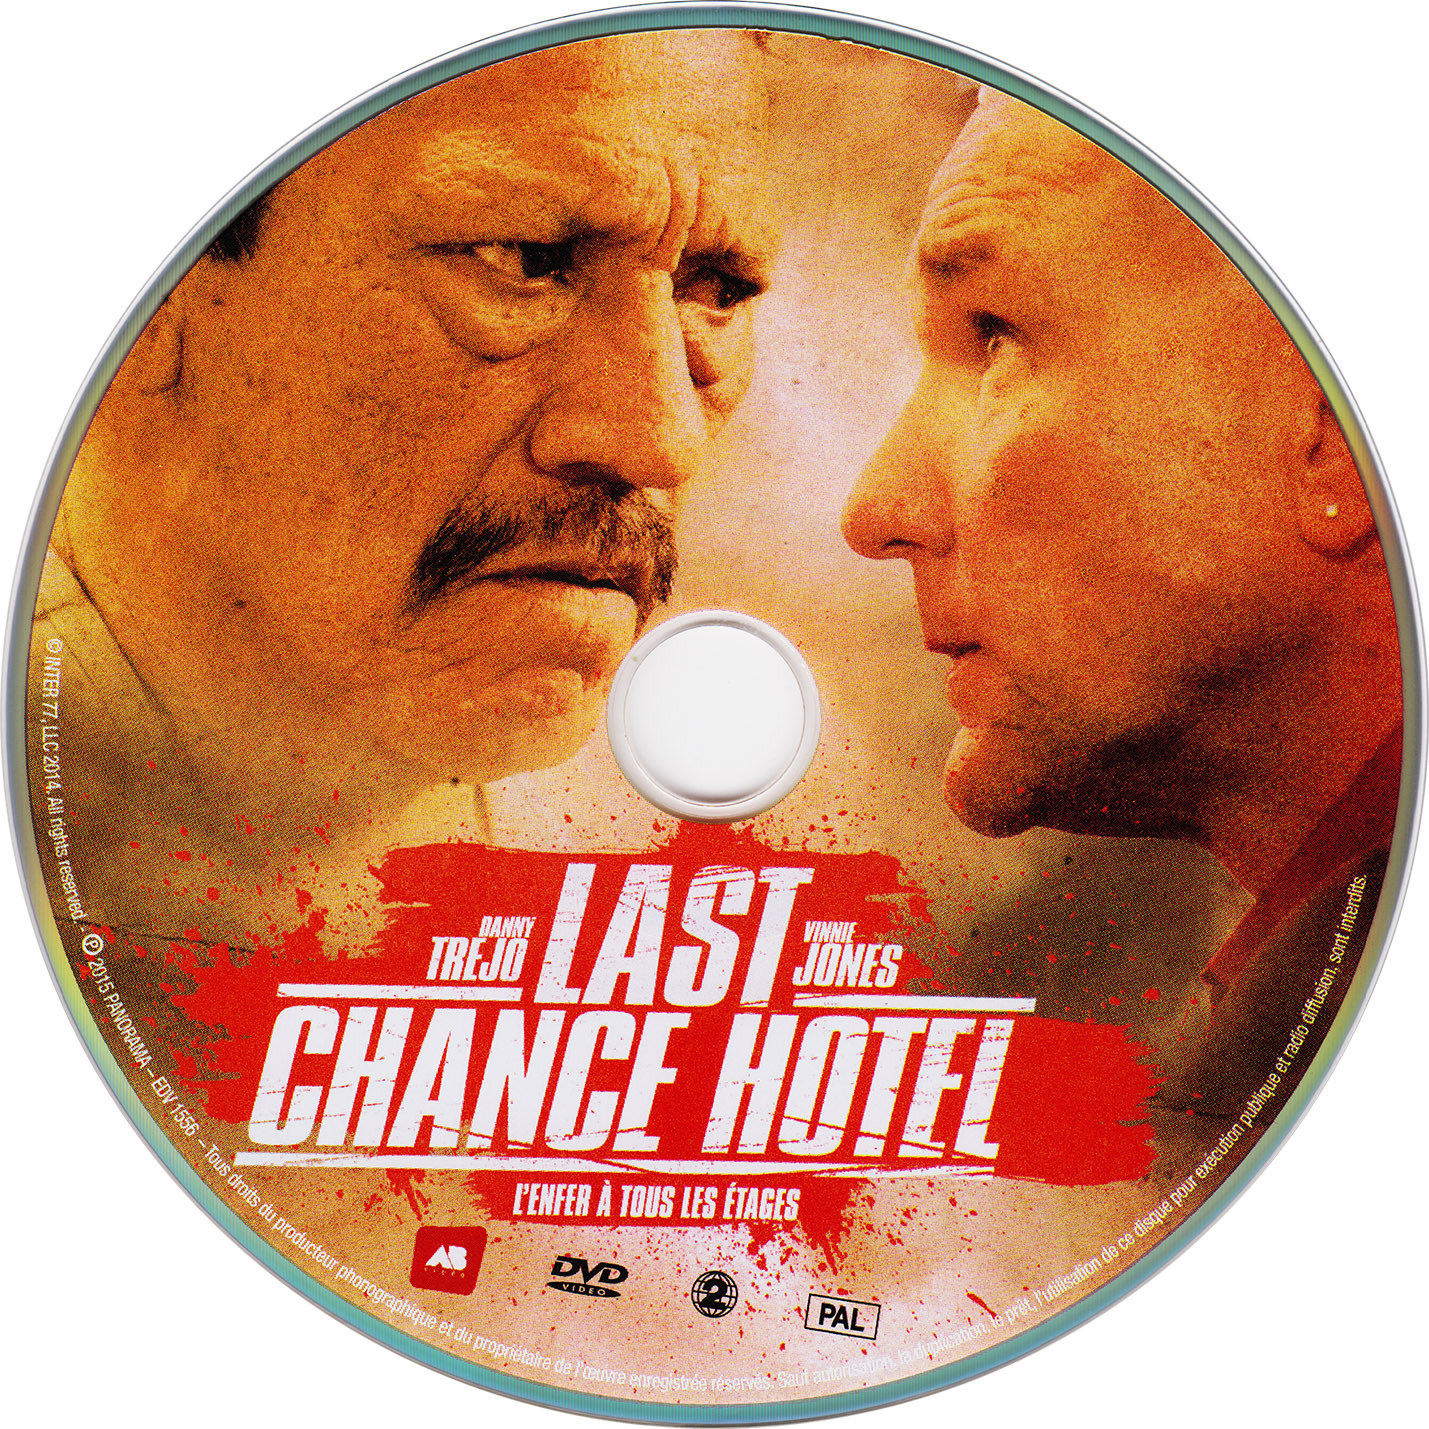 Last chance hotel (BLU-RAY)